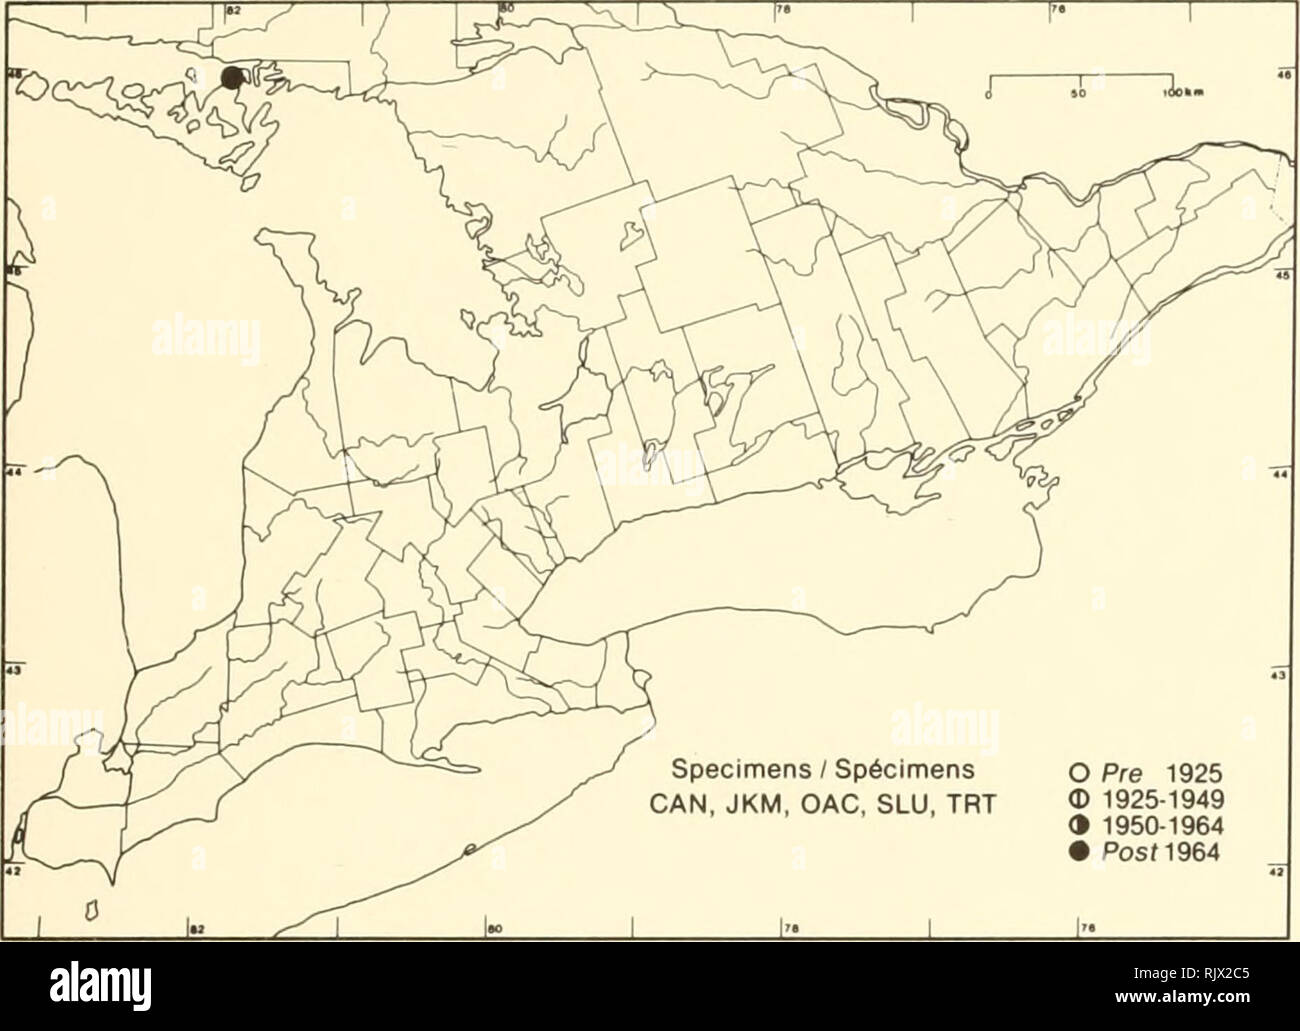 . Atlas of the rare vascular plants of Ontario. Rare plants; Botany. Atlas of the Rare Vascular Plants of Ontario / Atlas des plantes vasculaires rares de l'Ontario OROBANCHACEAE Orobanche fasciculata Nutt. Broomrape Orobanche. % 3'^^^y- ^ D. ^r-r^ v^ V^ C^ /-iSO  &gt; â S ^^^Ã»Sn^ ^-^-.^ =^^^^ )/l. lr%f-^rW V r^ ^ N %r Ãi^V^^p^ rx / ji'. ,â&quot;^^ / ') ^â7^ ^ M' i â v ;^â^Iji^-. T &quot;i  -''-^11  T V&gt;4Sy; //3'&quot;^N ^ &quot;) ^t&gt; i r -^)V^^^^^^3^^ 3^/ ' (J / -tlT-T^-. ^^^; ^^/I|Xi ^ rVp ^ //LrT &quot; &quot;'^^Ft^iX^--V^Vjt &quot;-- V.,i5Â§ ' -.r In ' .' 'â X--ls&gt Stock Photo